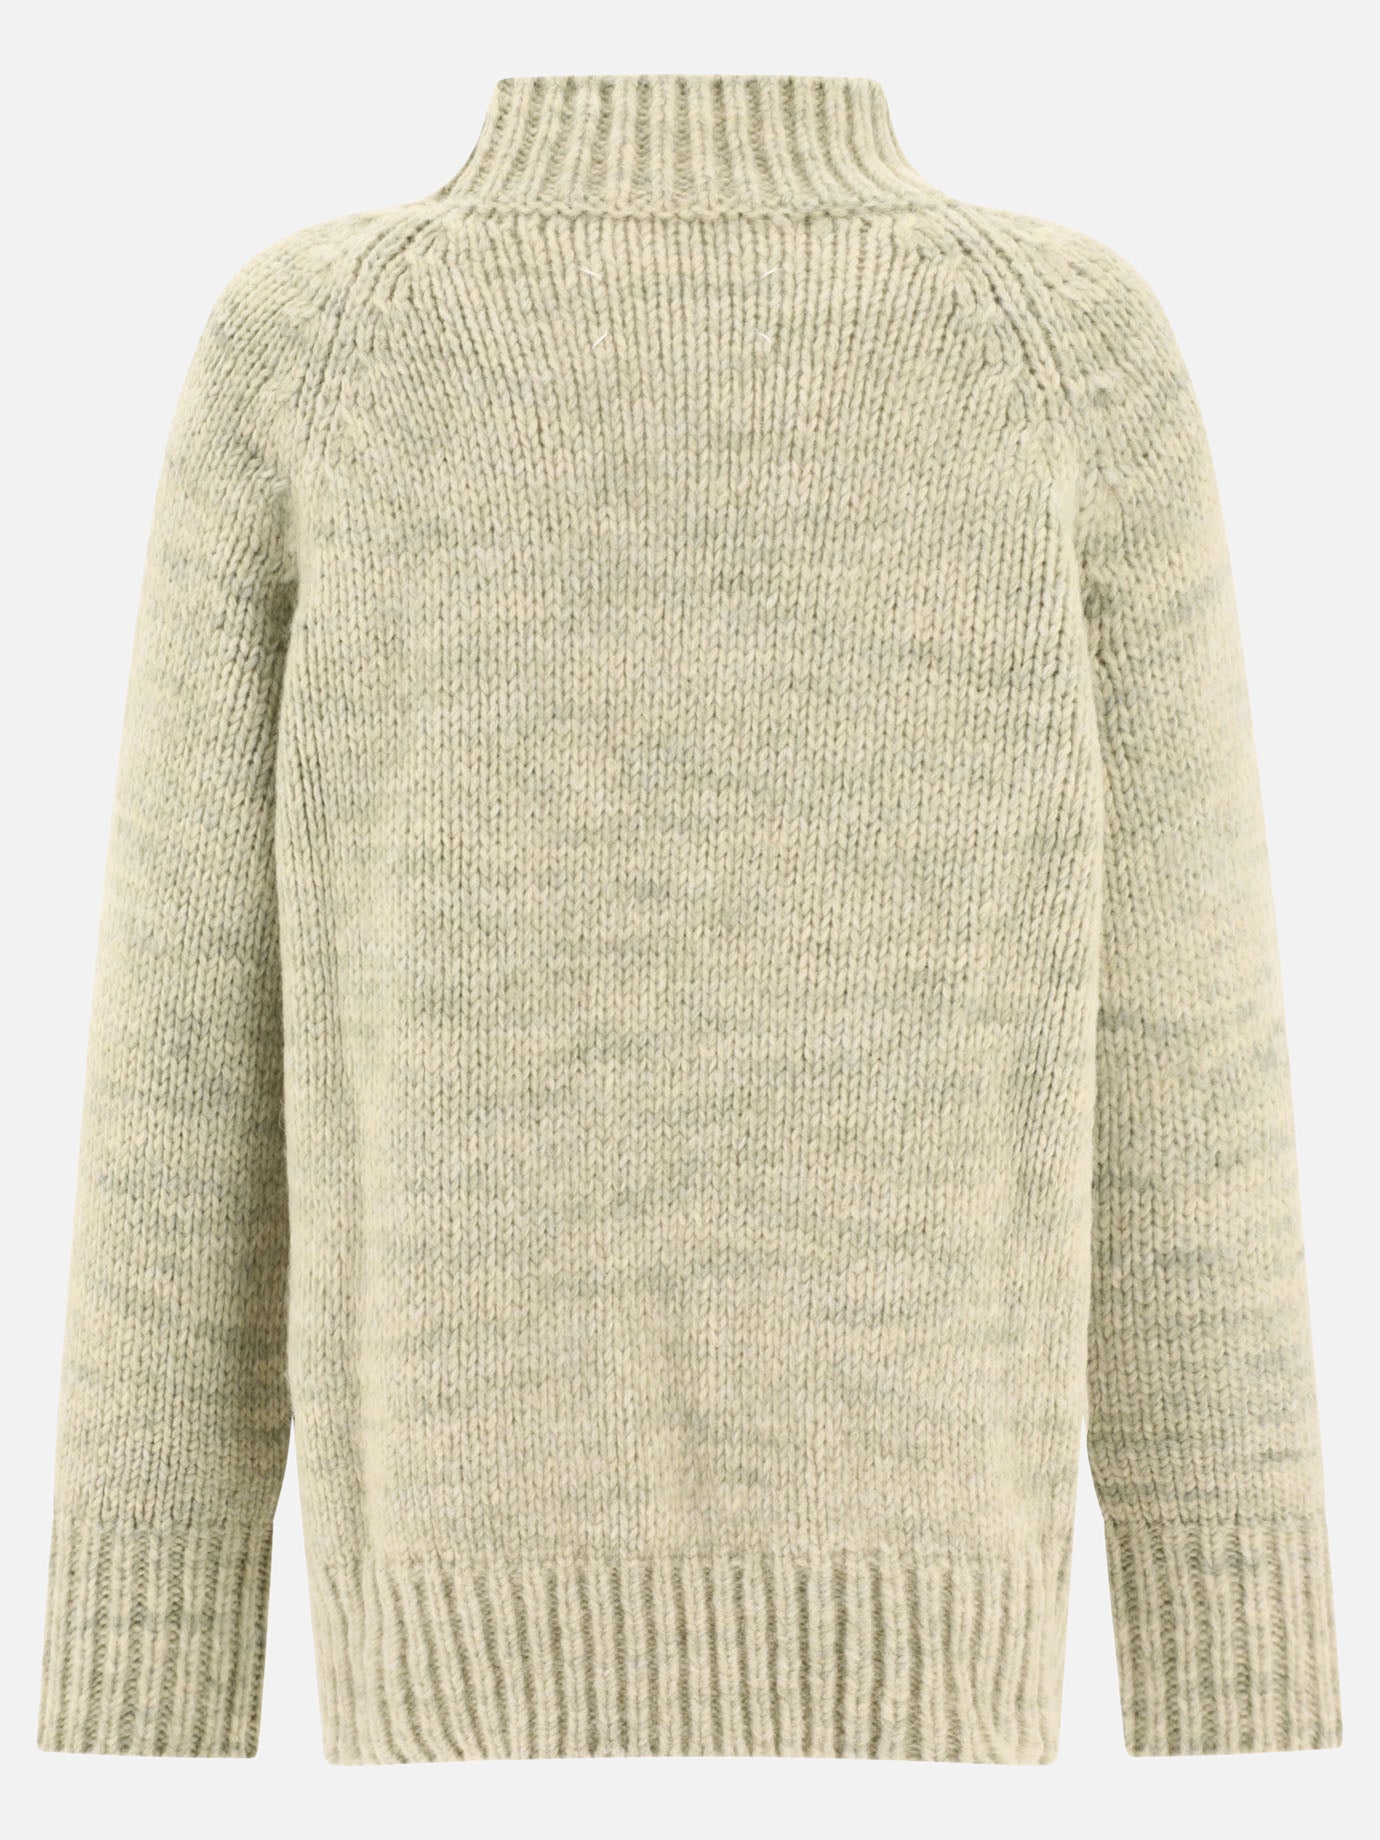 "Botanical Dye" Sweater